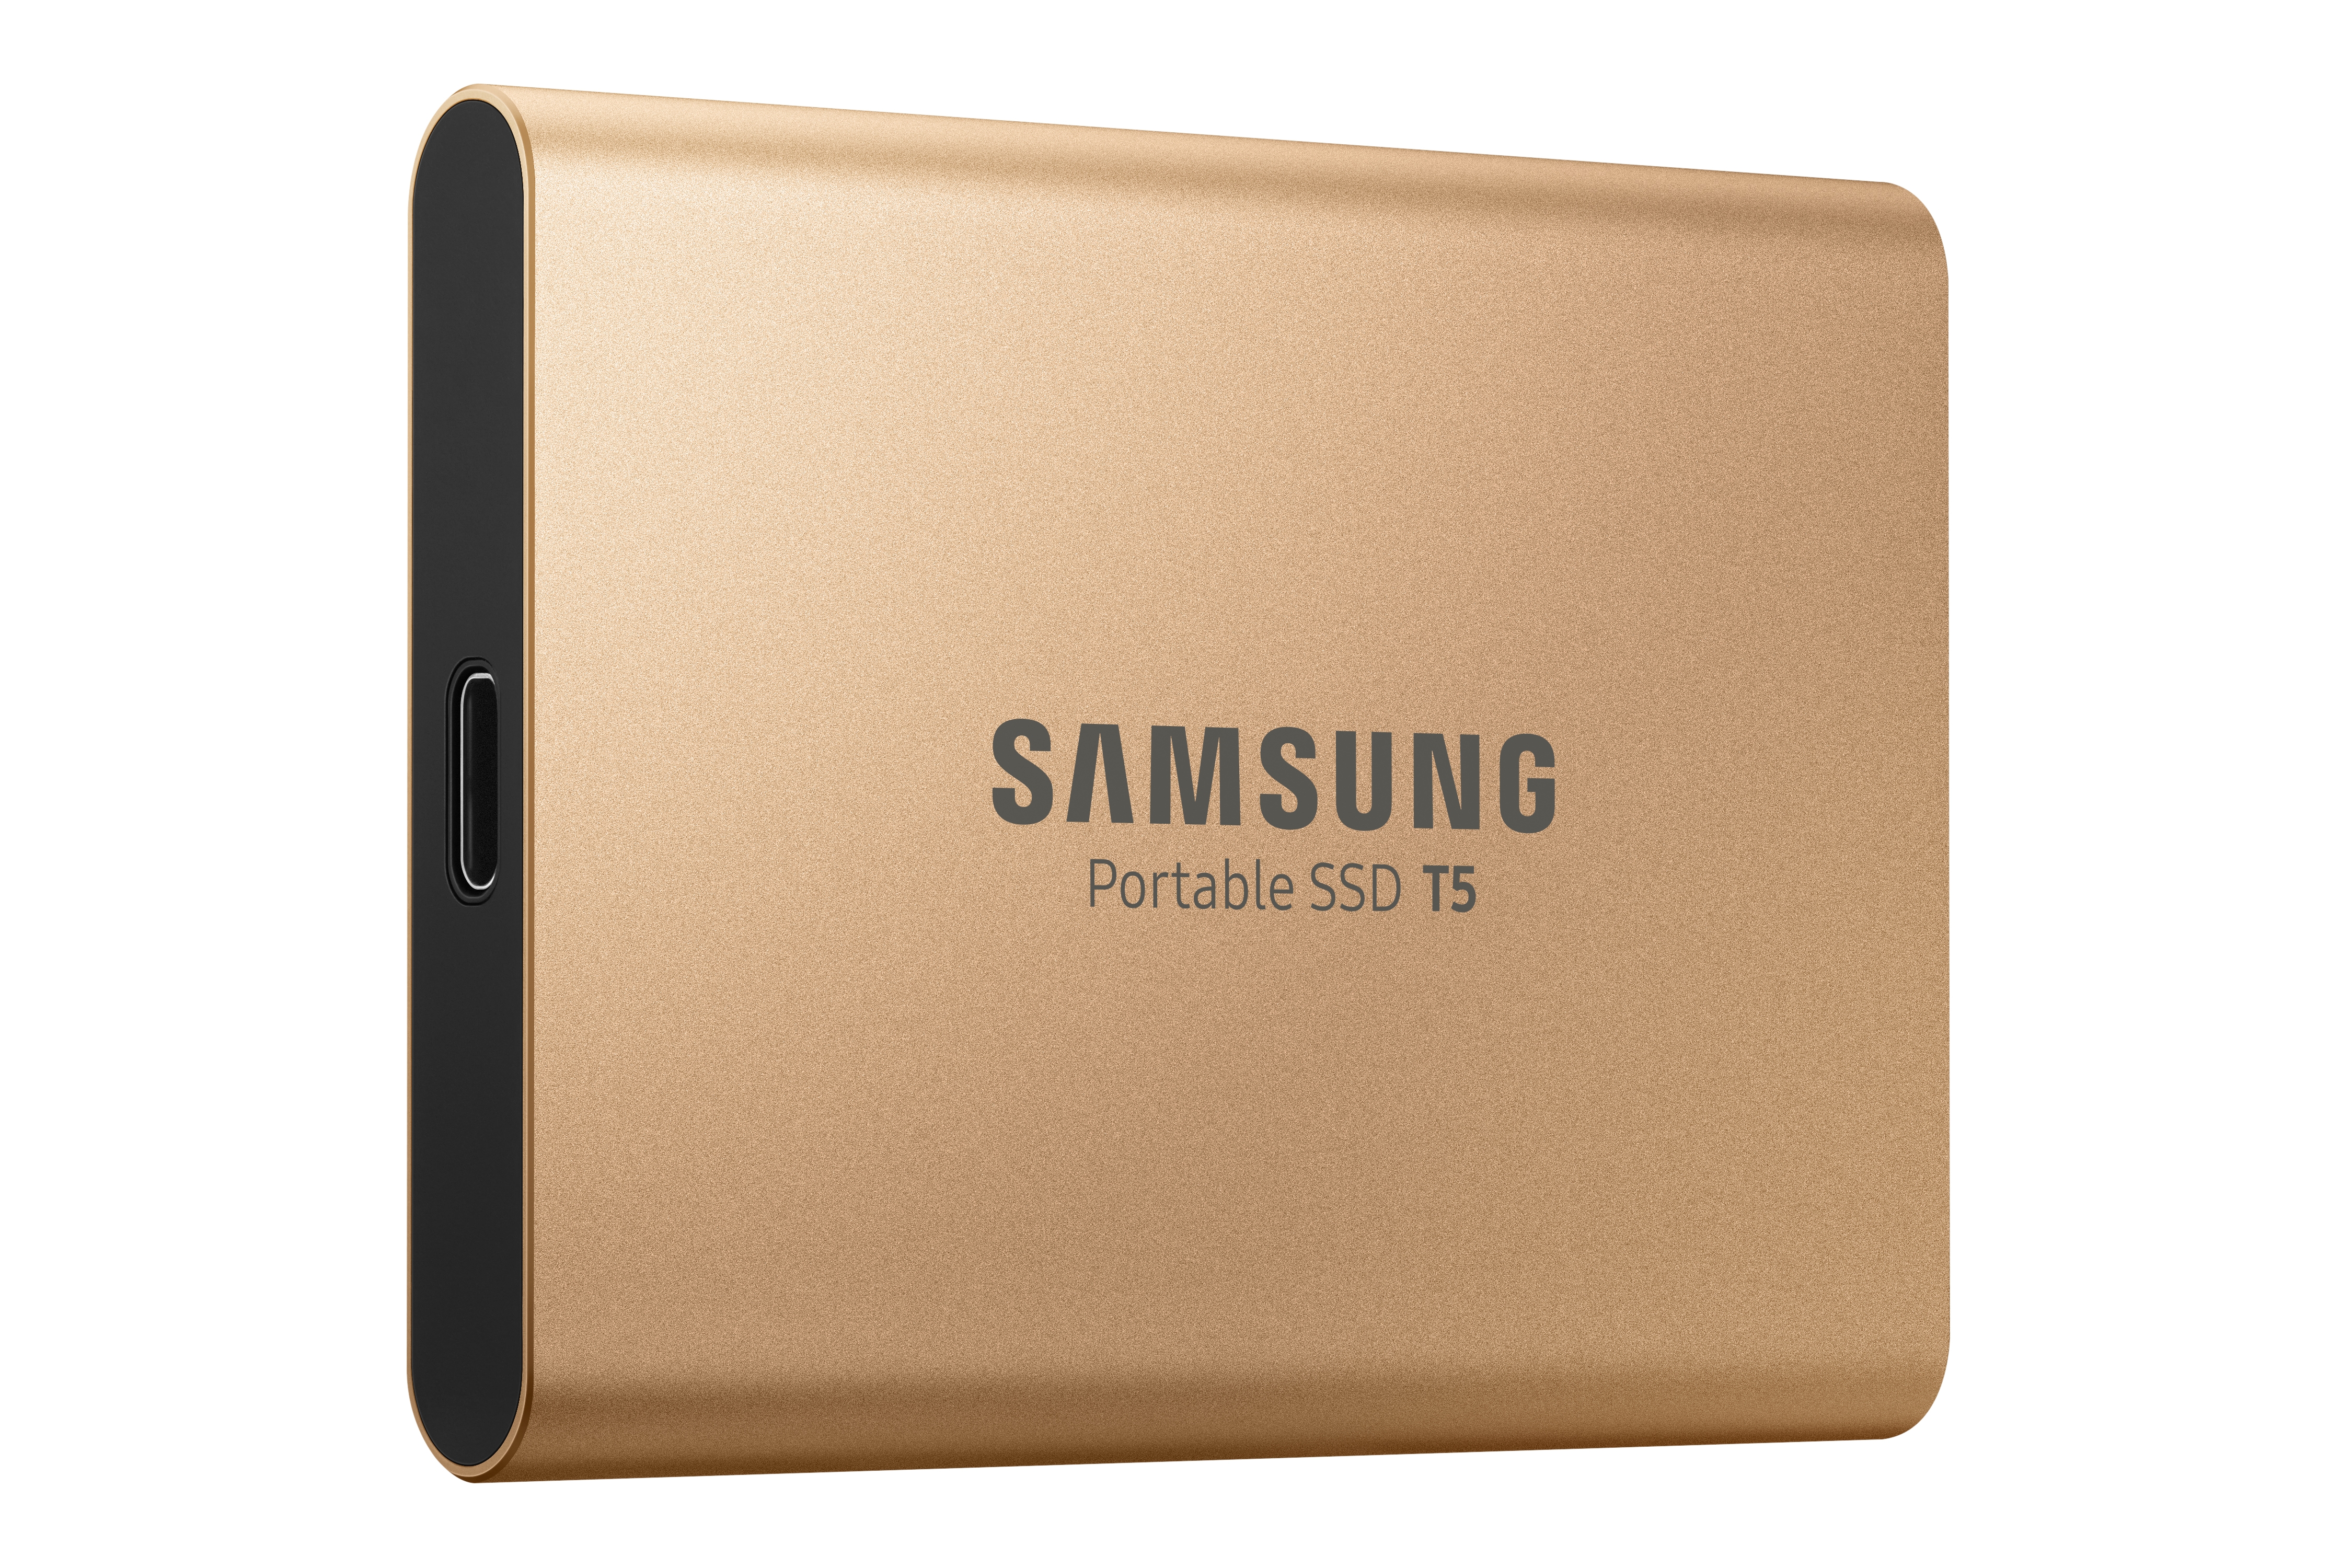 Portable SSD 500GB Memory & Storage - MU-PA500G/WW | Samsung US